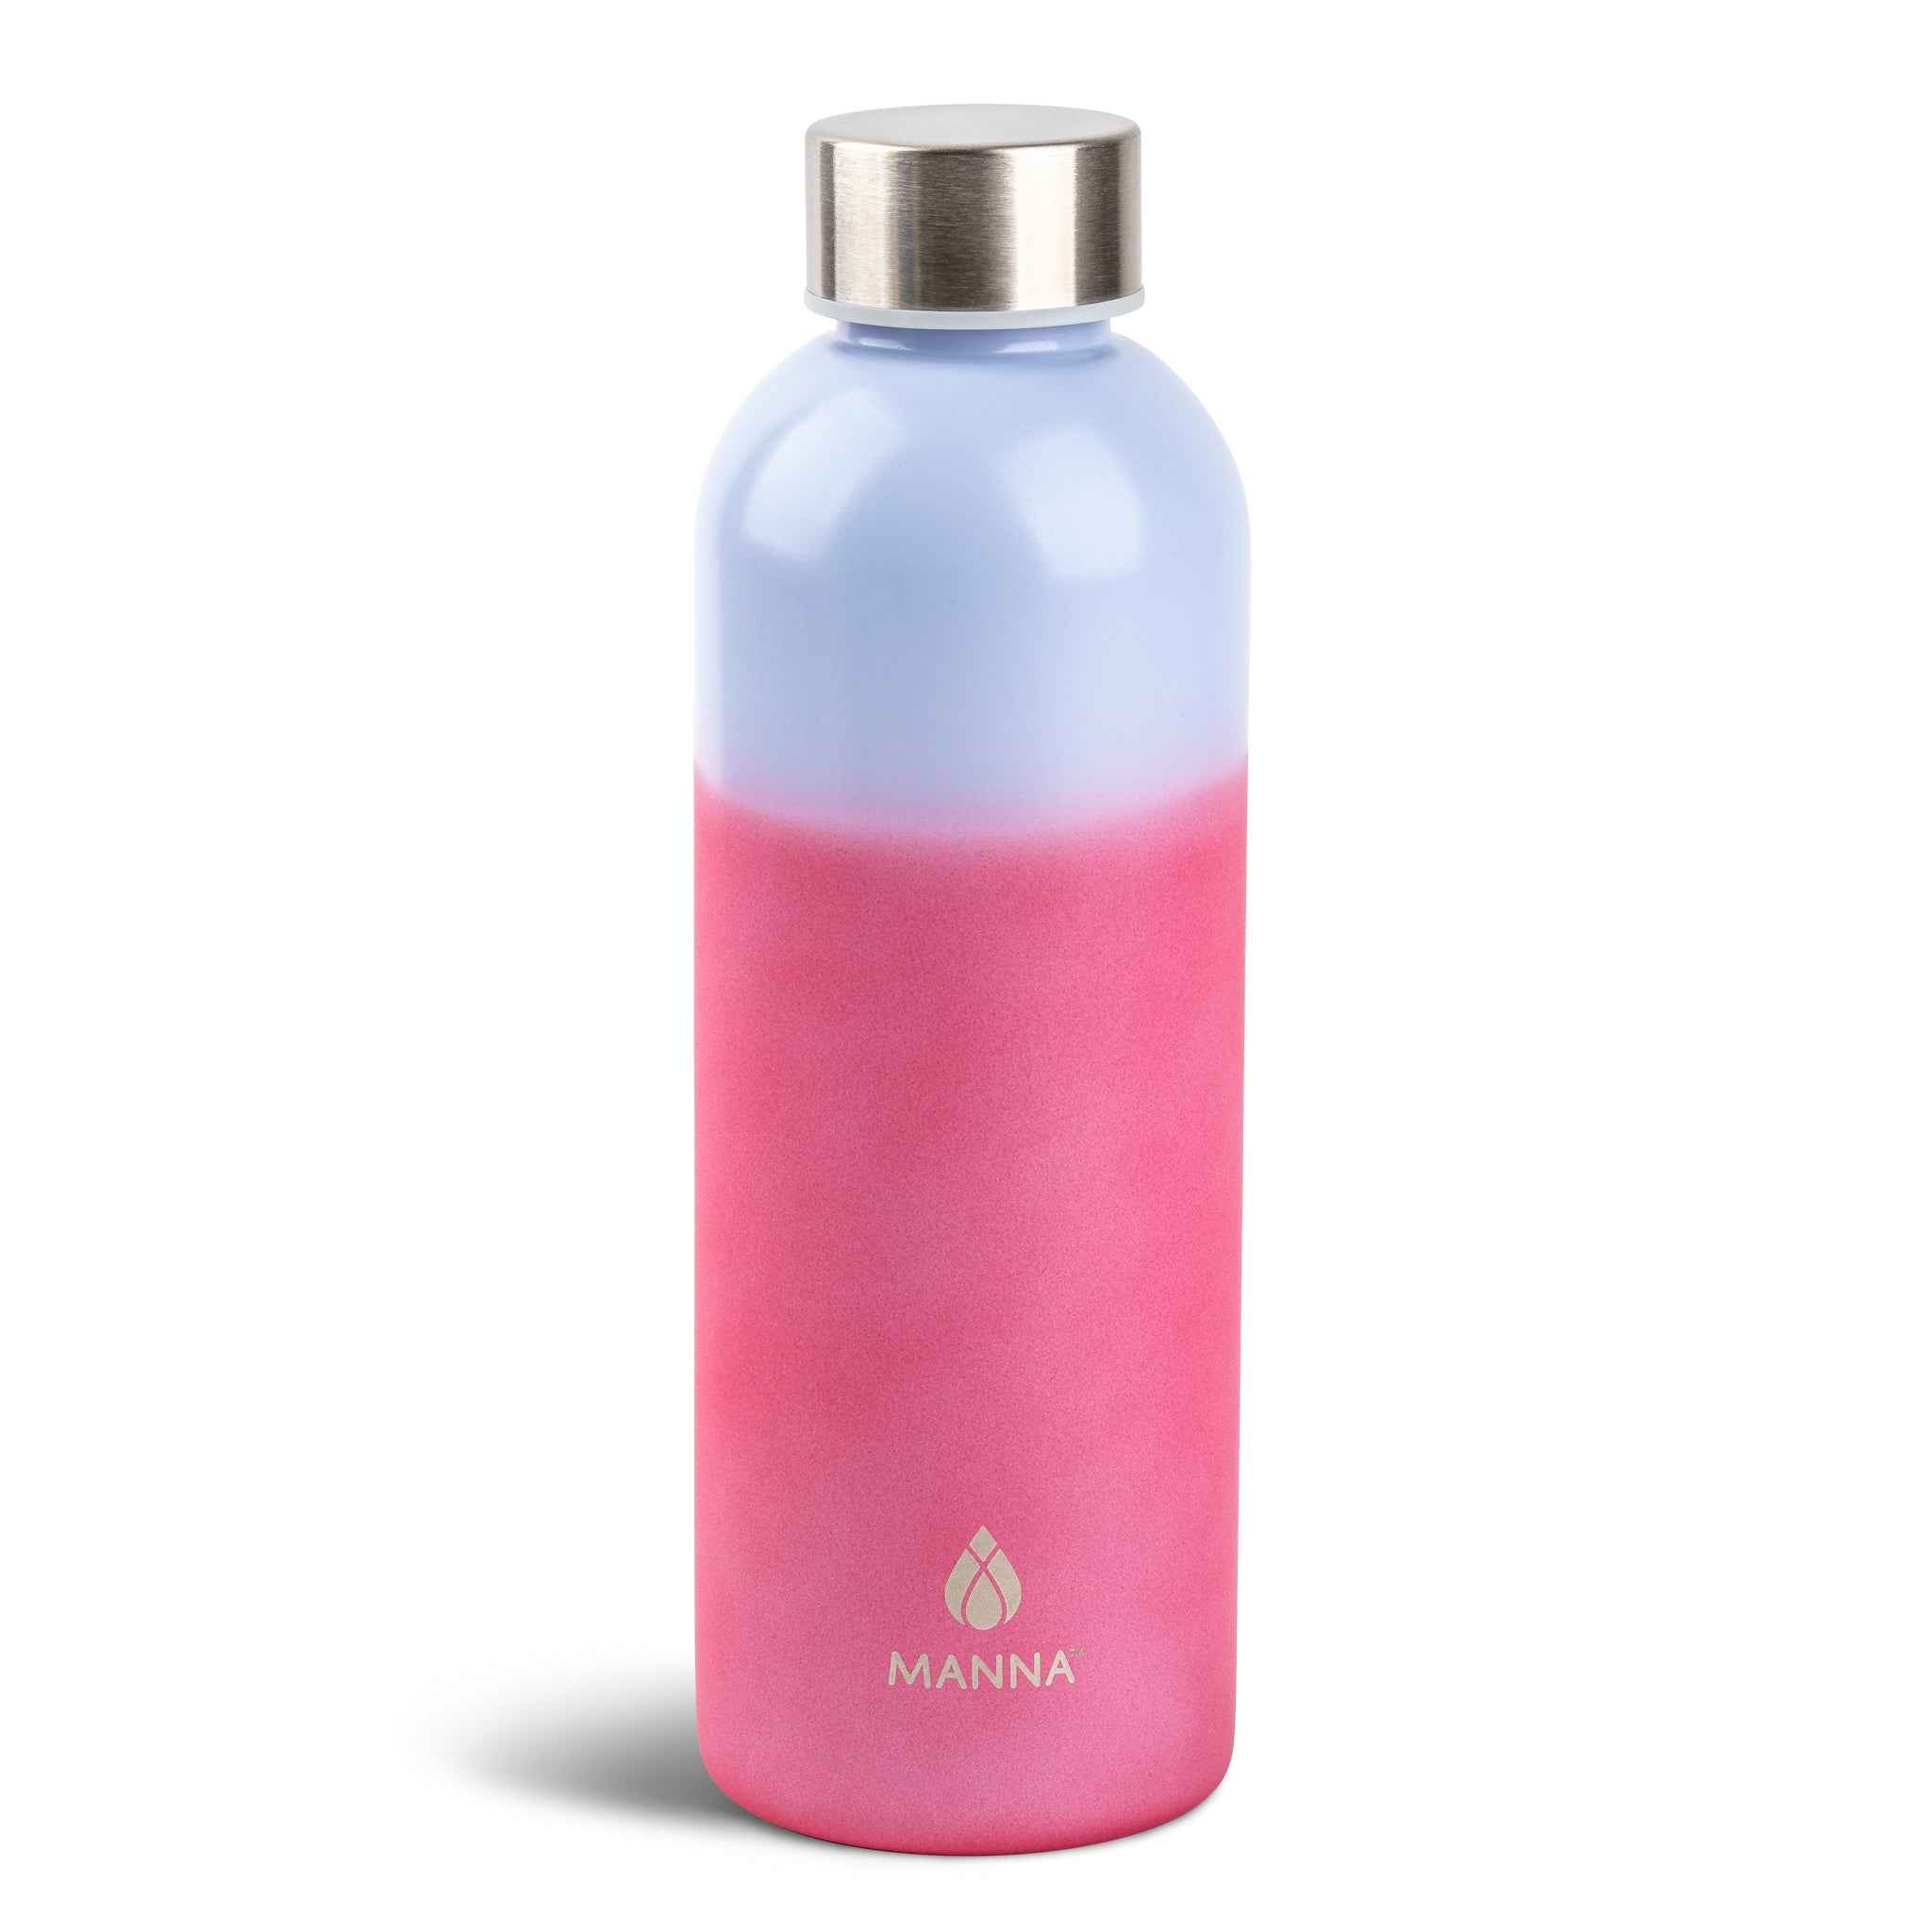 Reduce® Light Pink Hydrate Water Bottle, 1 ct - Gerbes Super Markets